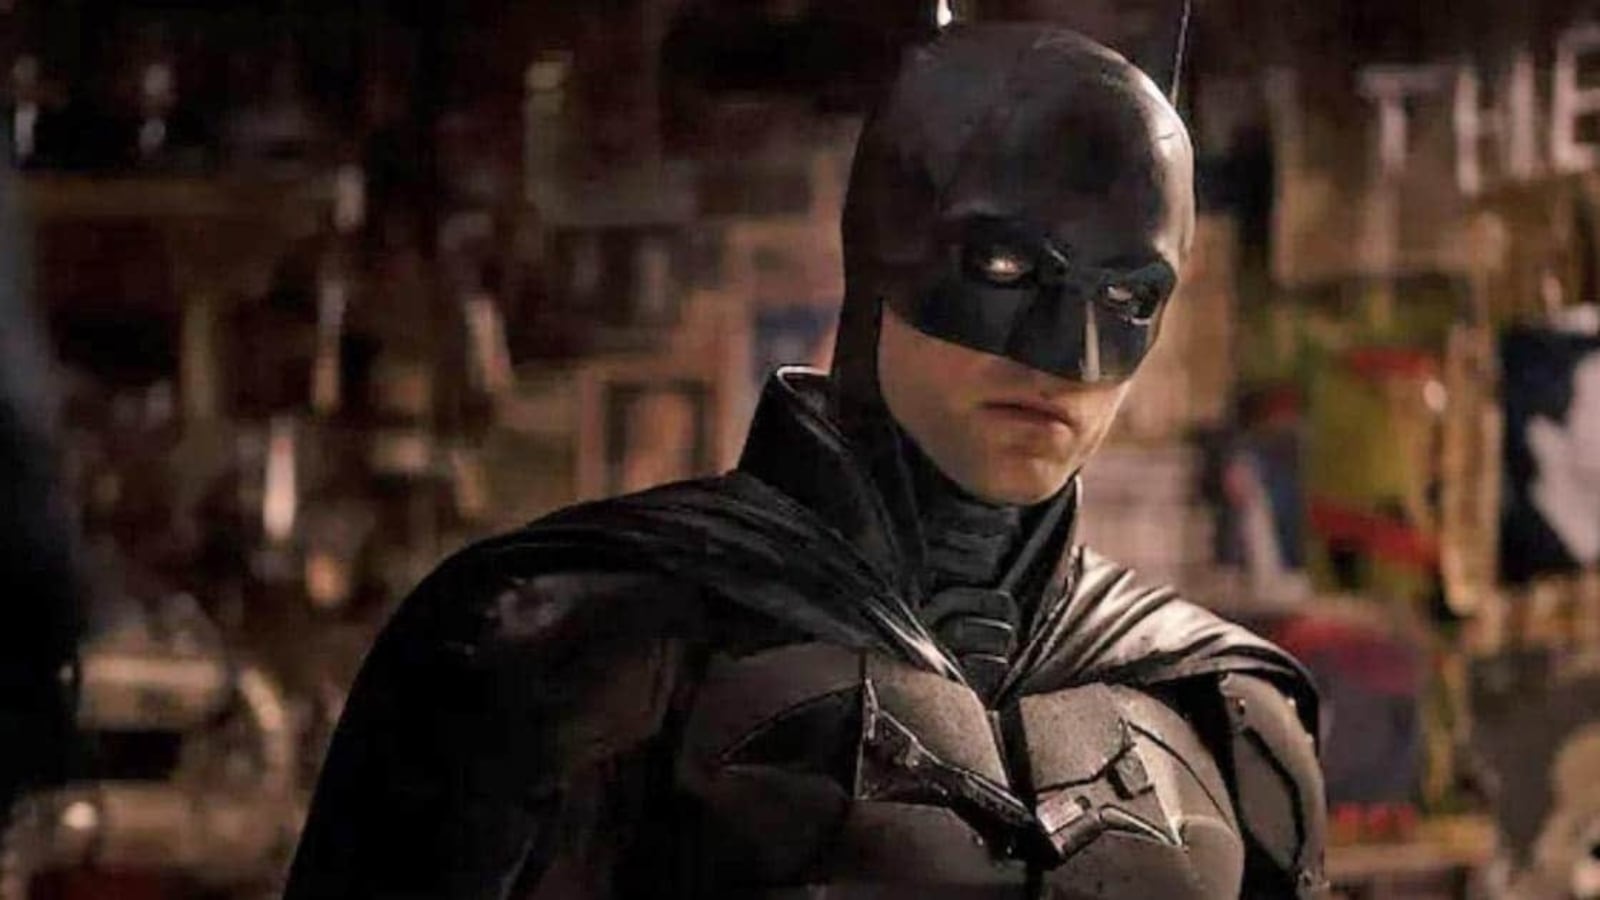 The Batman 2 announced, will bring back Robert Pattinson, Matt Reeves |  Hollywood - Hindustan Times